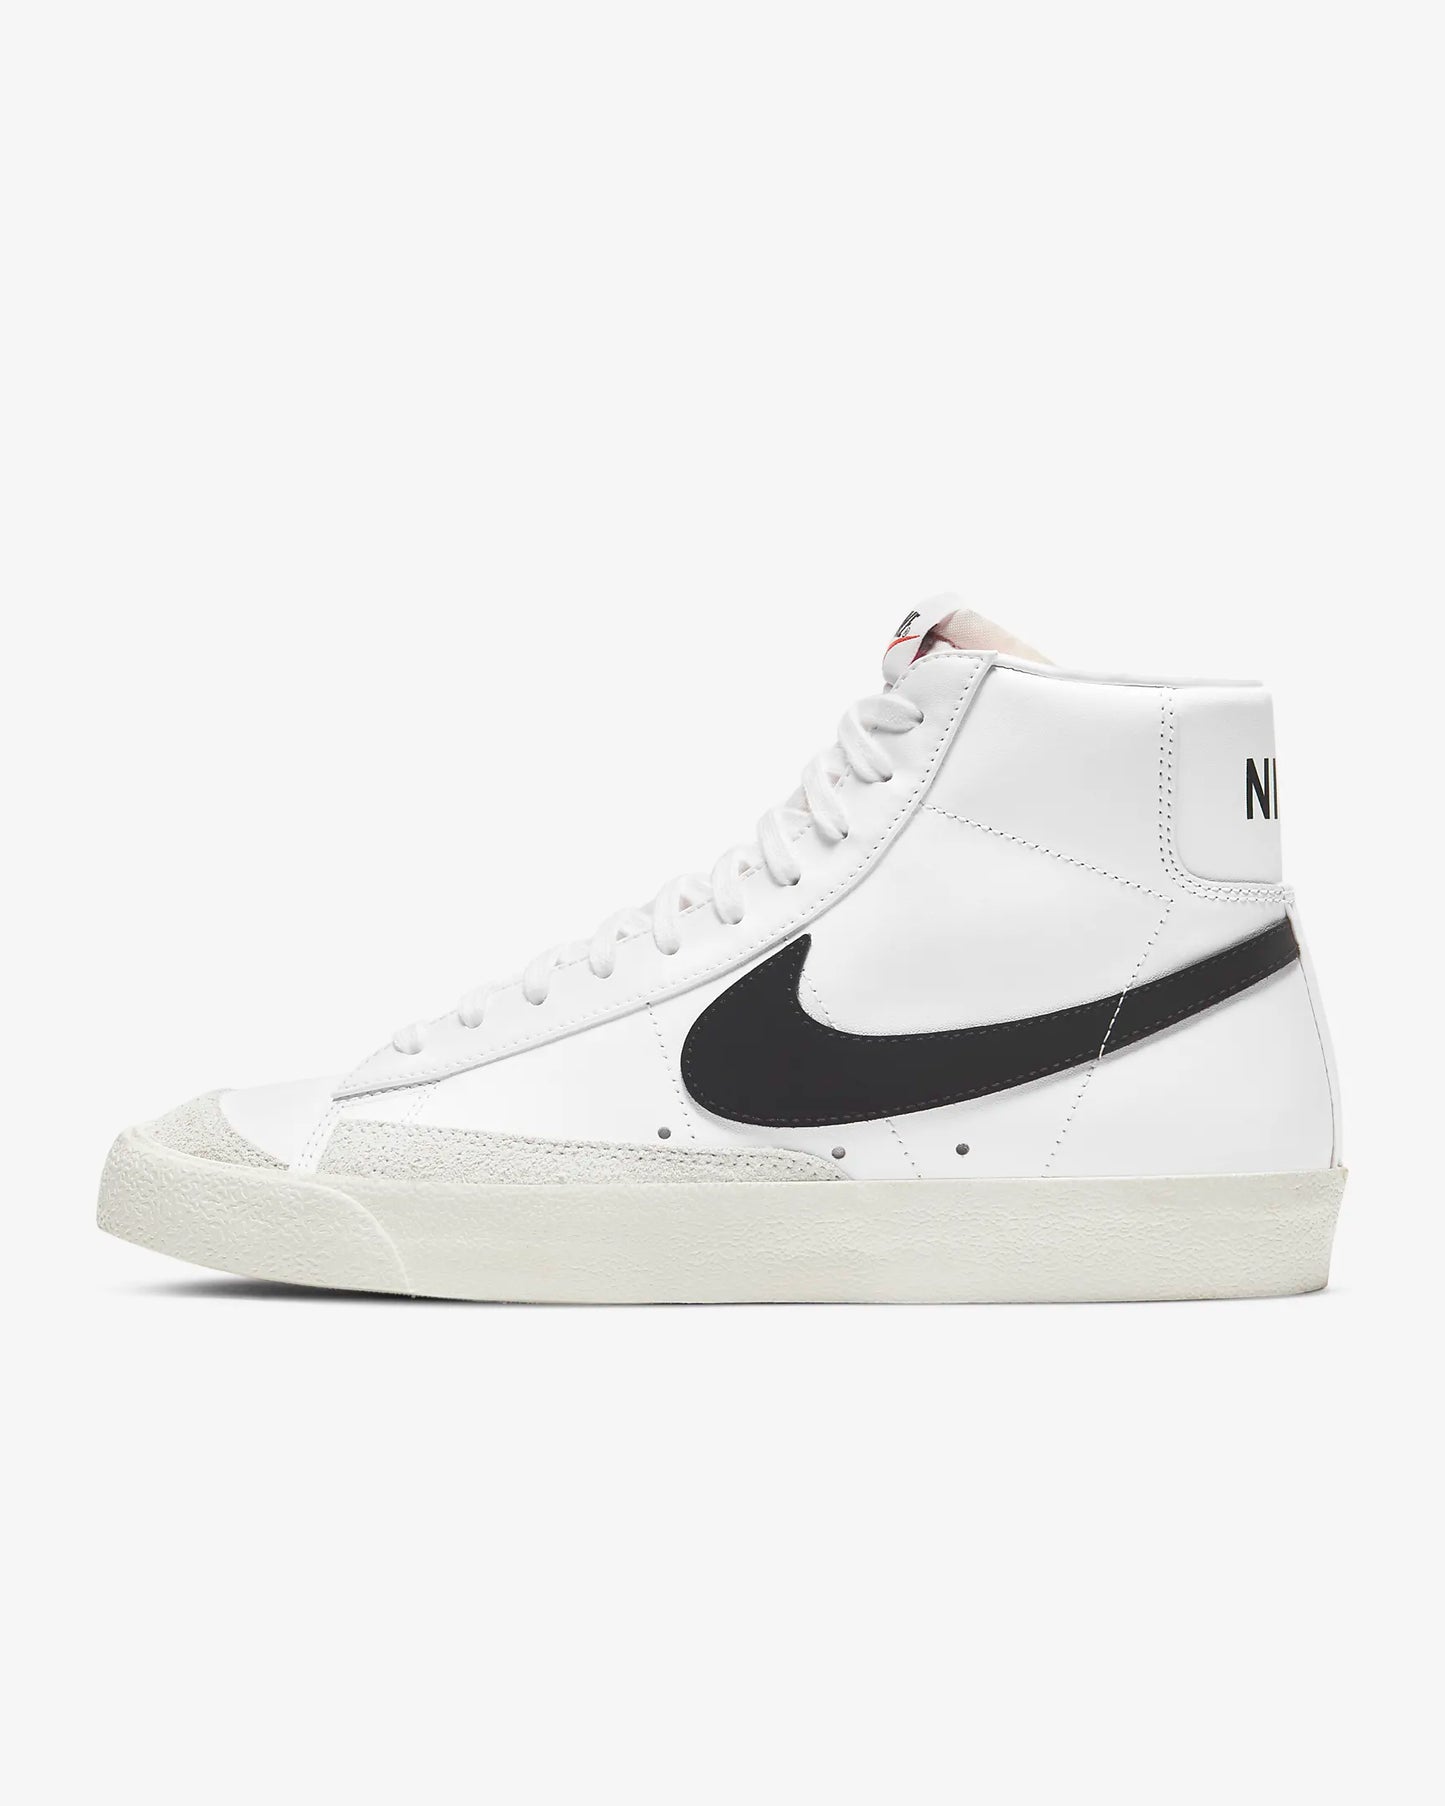 Nike Blazer Mid '77 Vintage White Black(Brand New)(Originals)(Pre-Orders Only)